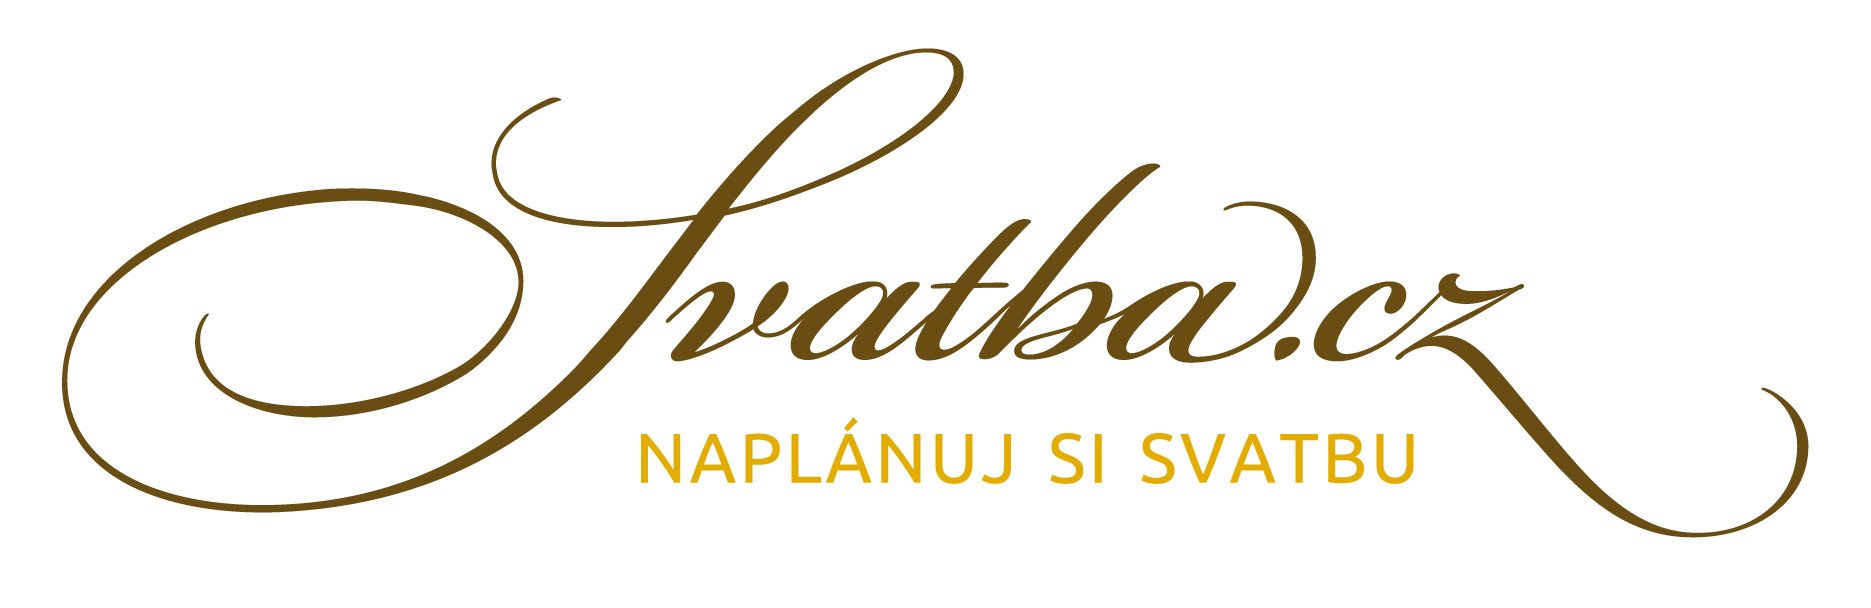 svatbacz-logo